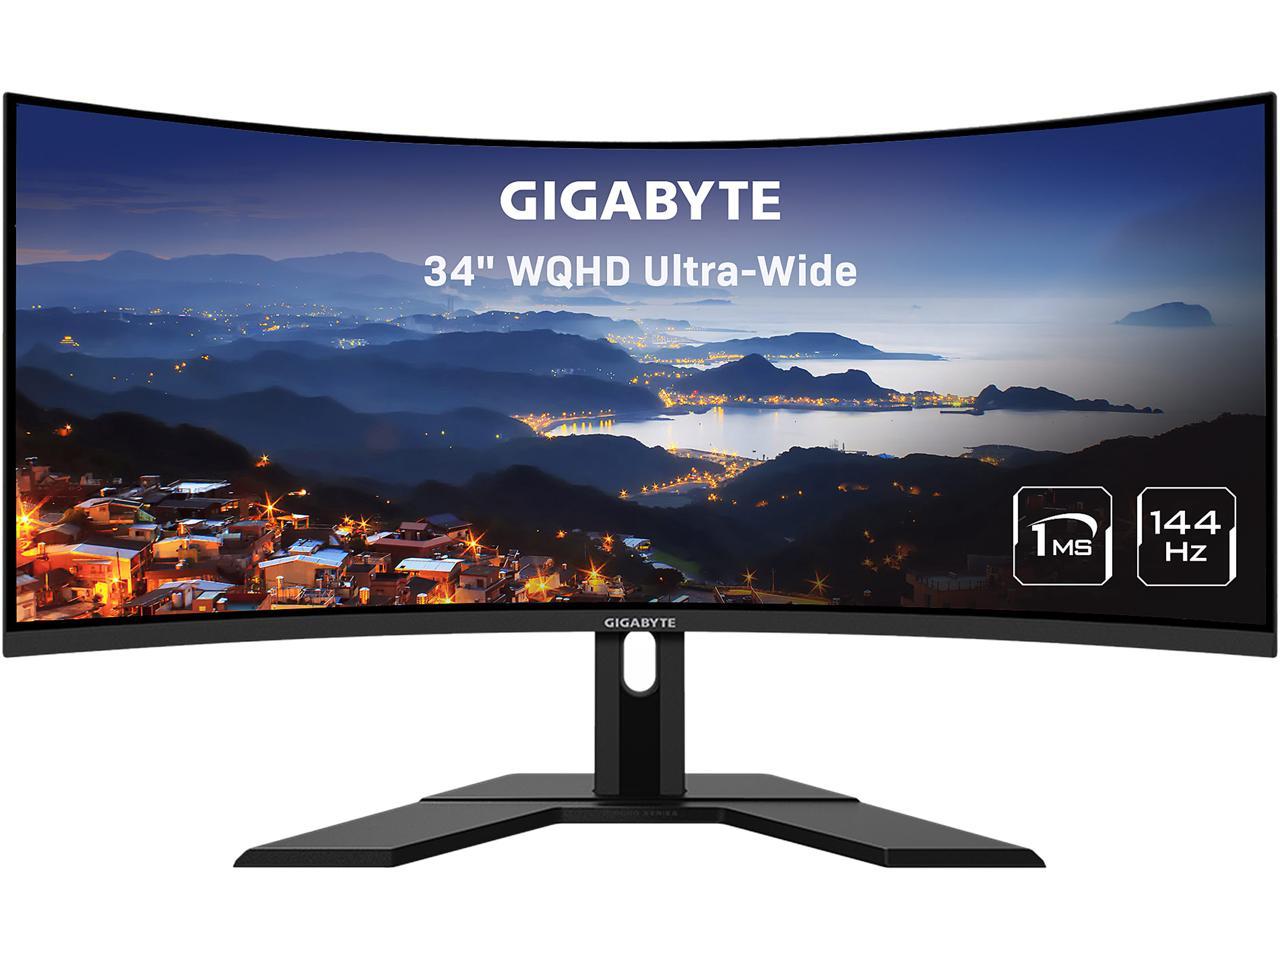 34" GIGABYTE G34WQC A-SA  UWQHD 144Hz HDR400 Curved Gaming Monitor $370